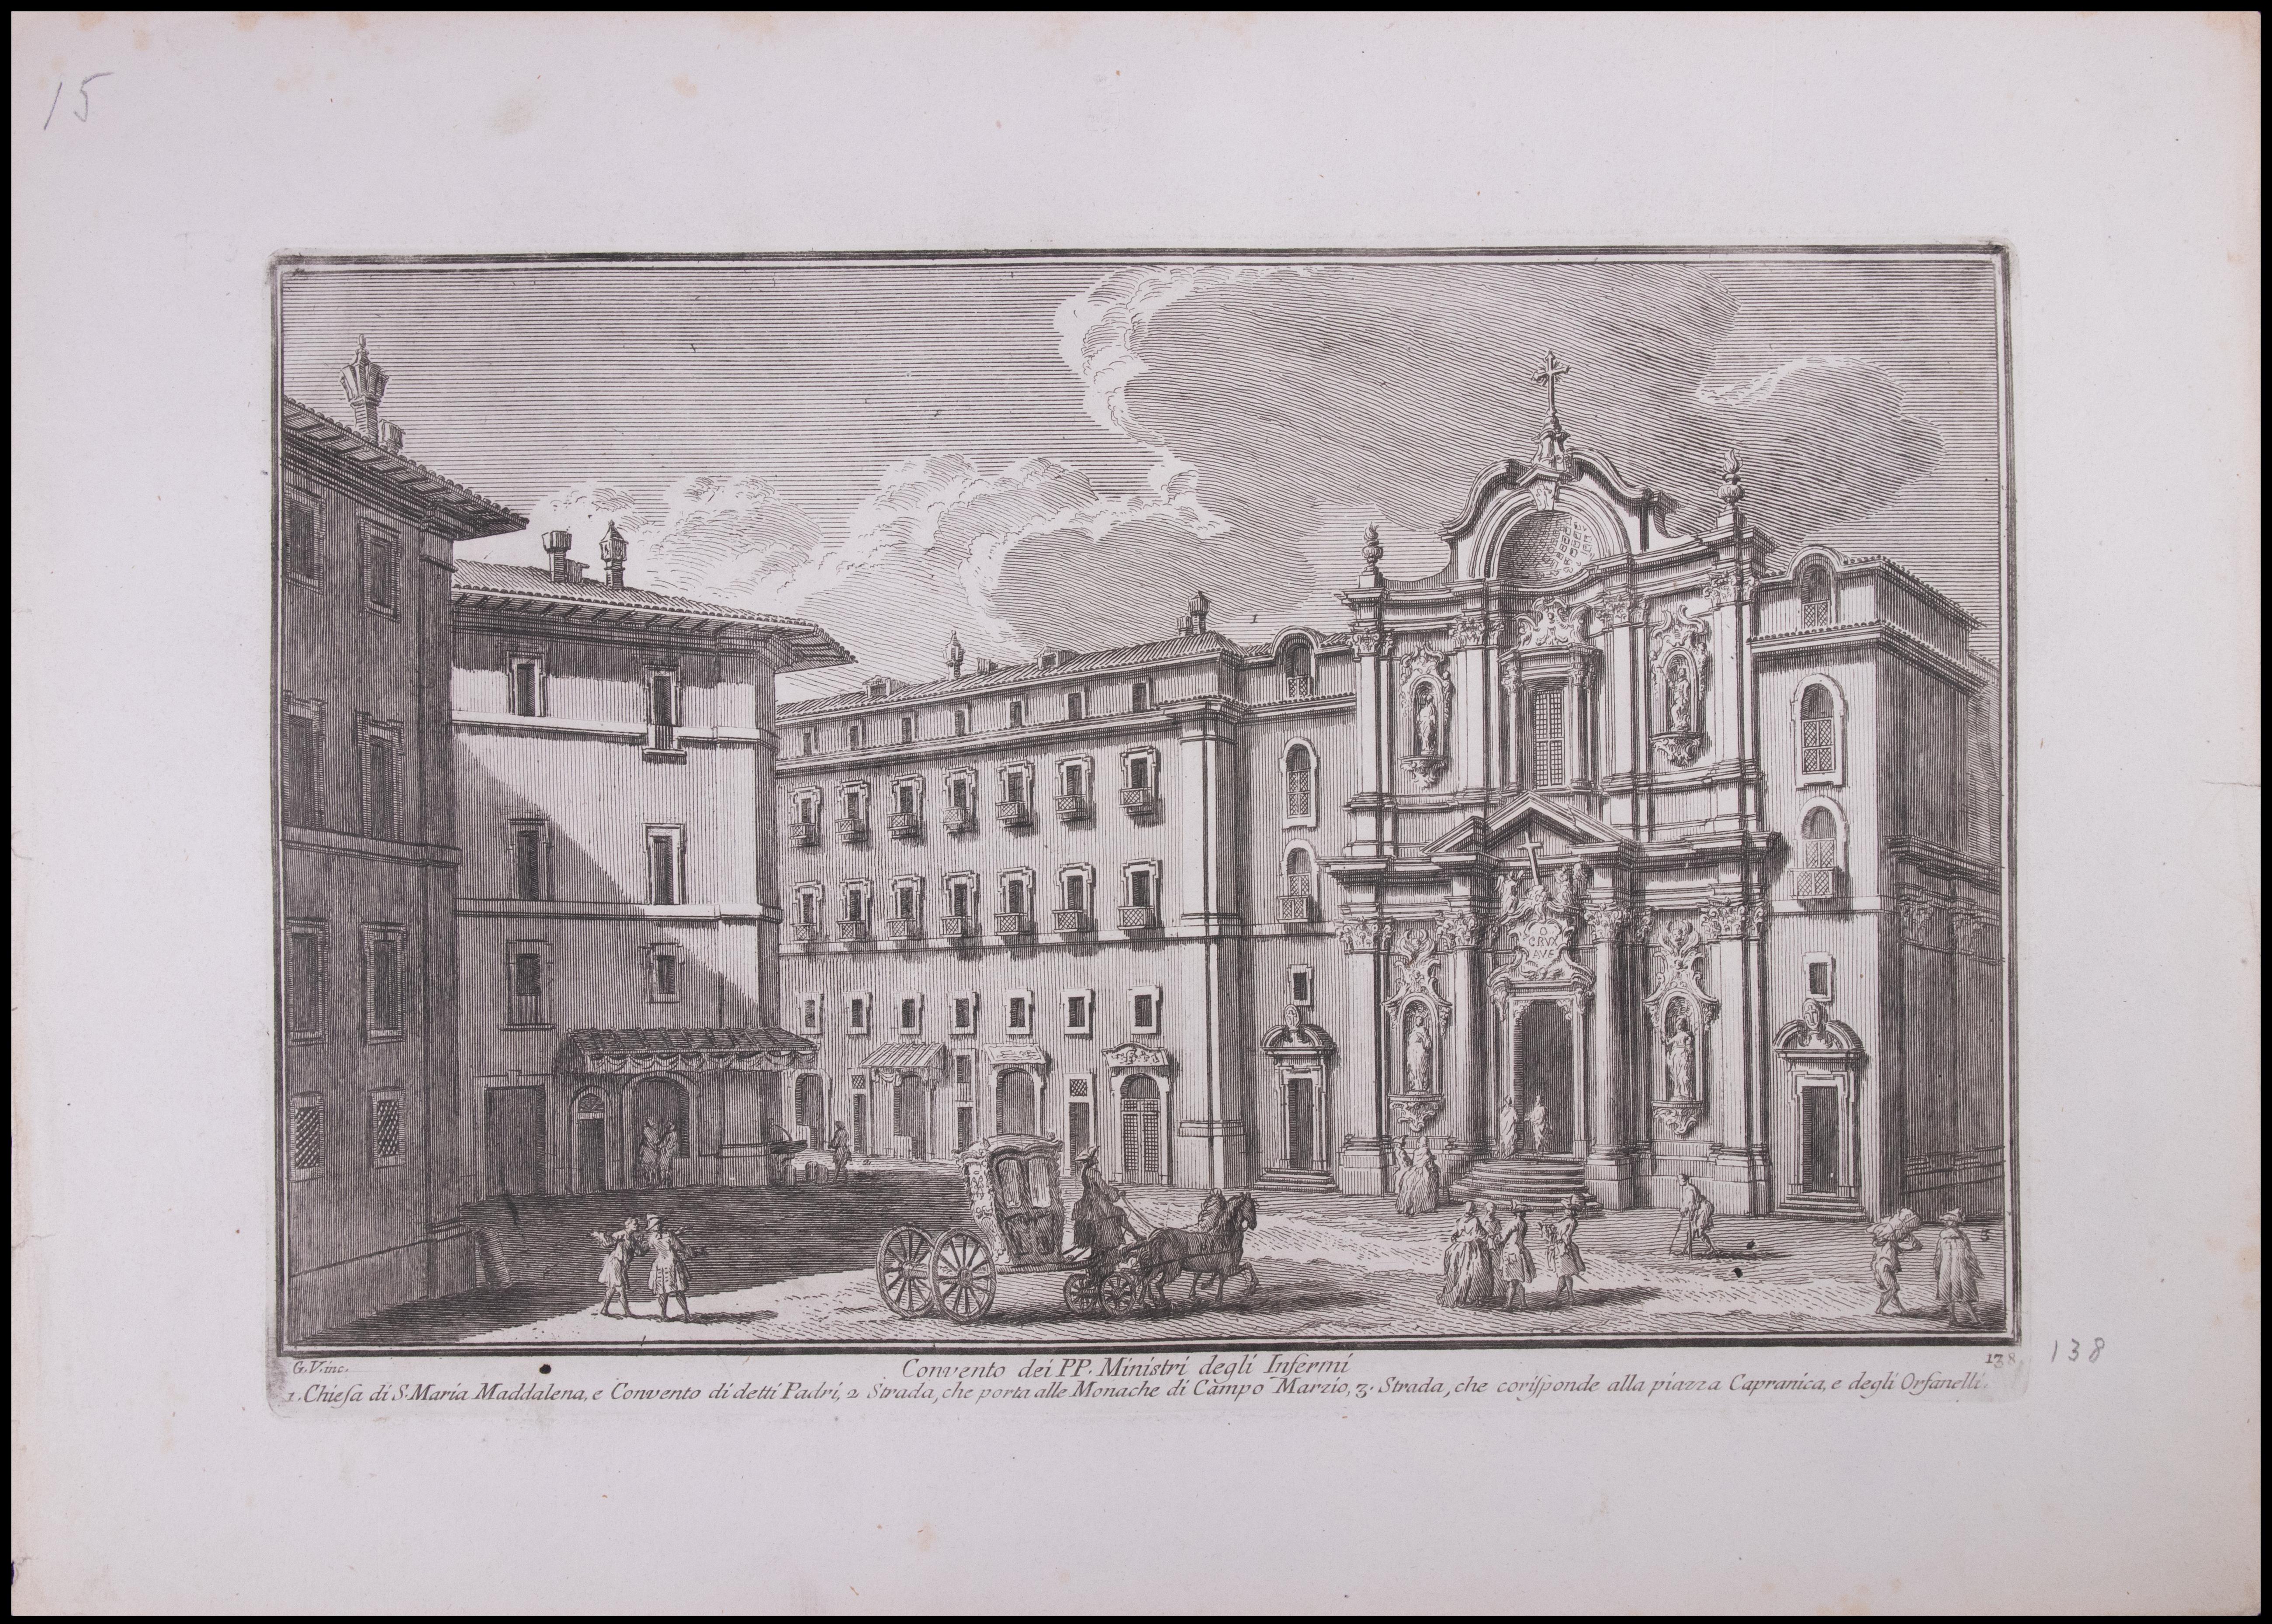 Giuseppe Vasi Landscape Print – Convento dei PP.Ministri degli Infermi - Radierung von G. Vasi - 18. Jahrhundert